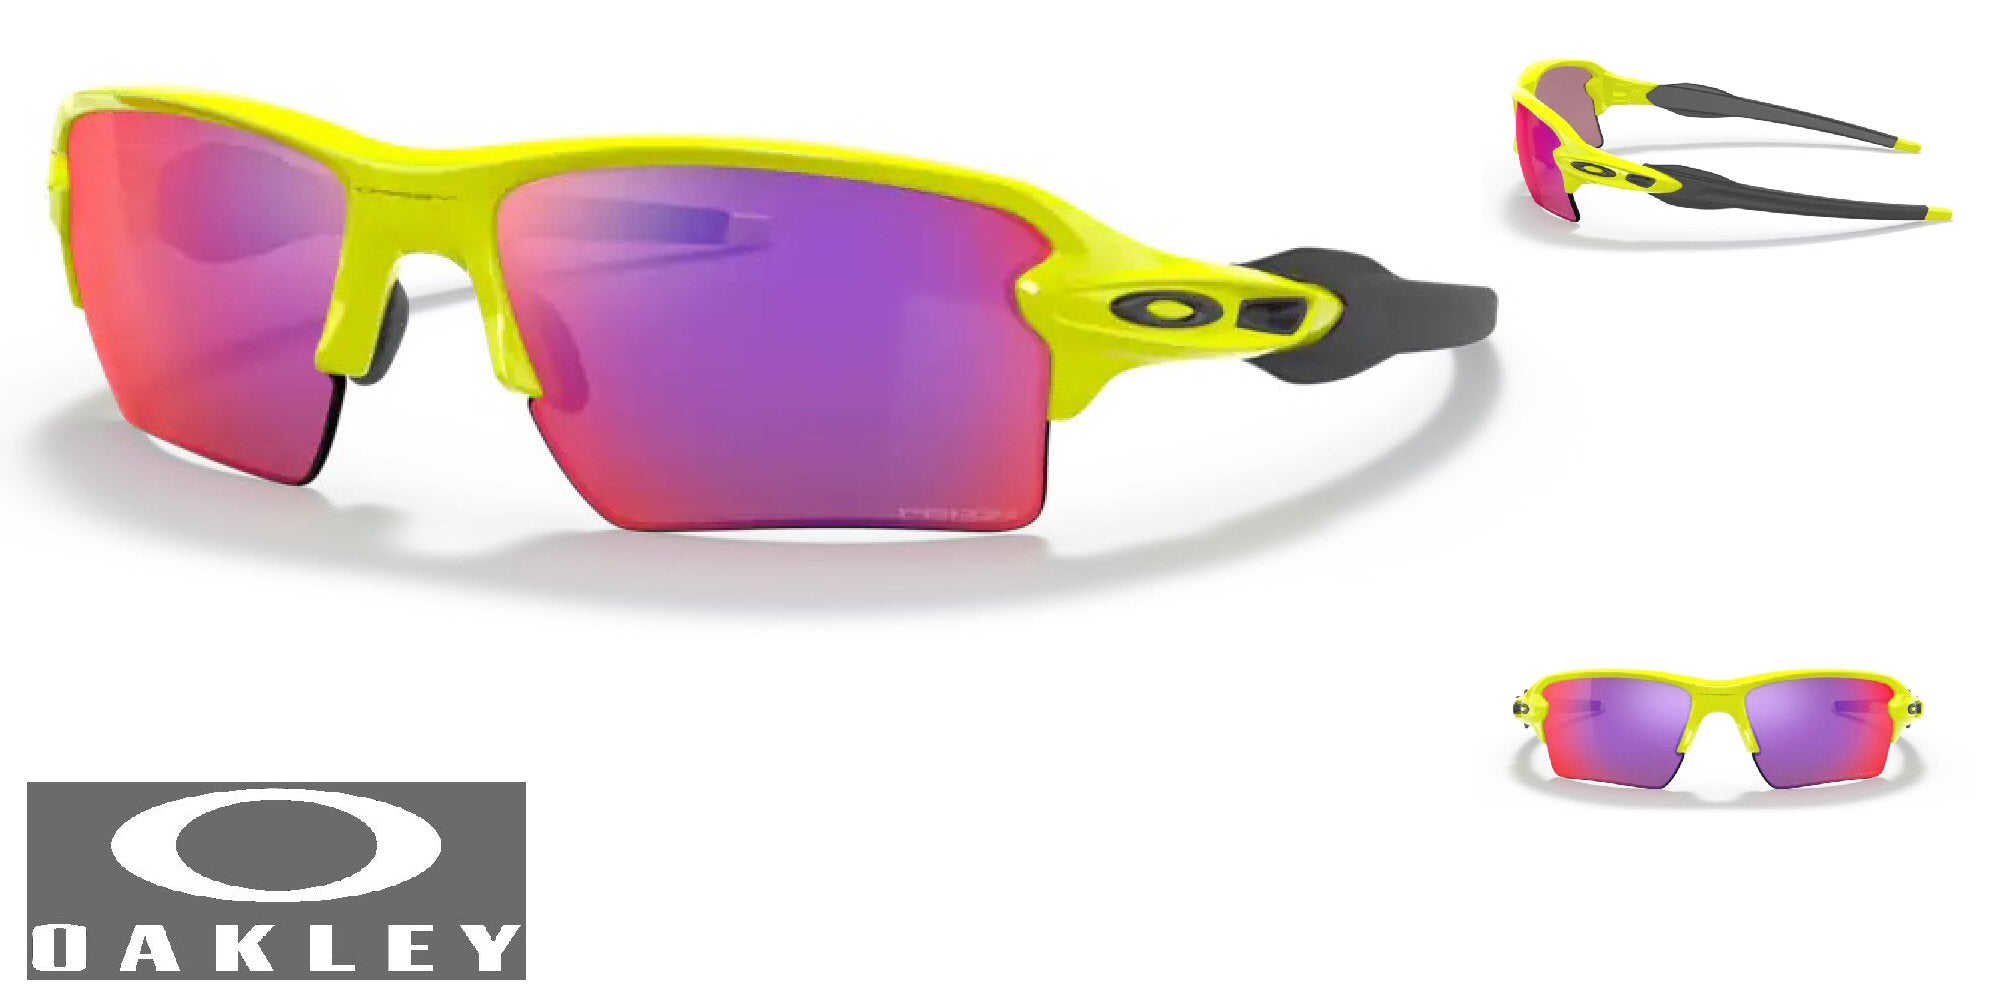 Oakley Flak 2.0 XL Sunglasses - Tennis Ball Yellow Frame/Prizm Road Lenses